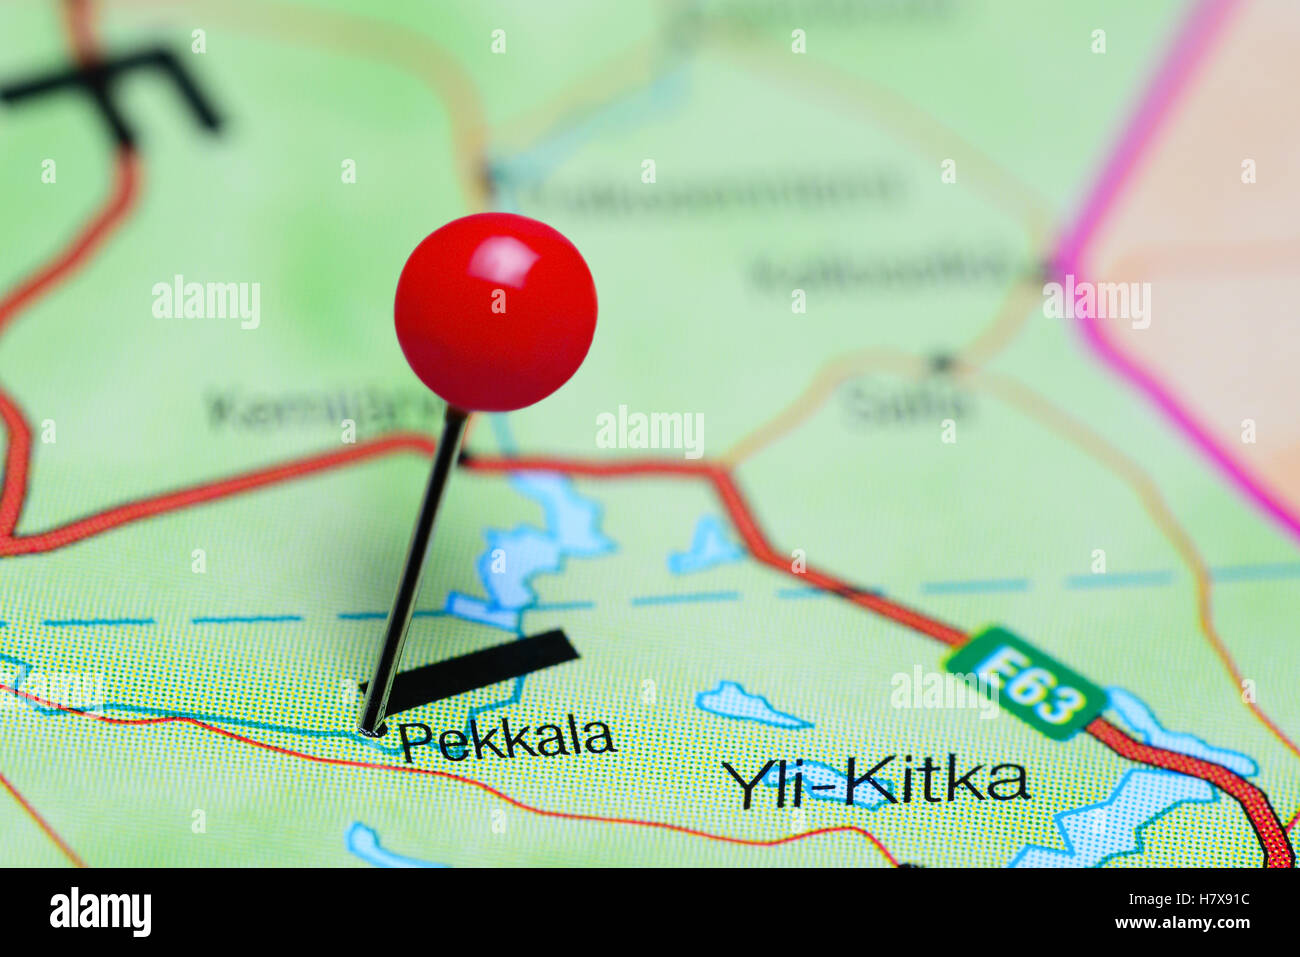 Pekkala pinned on a map of Finland Stock Photo